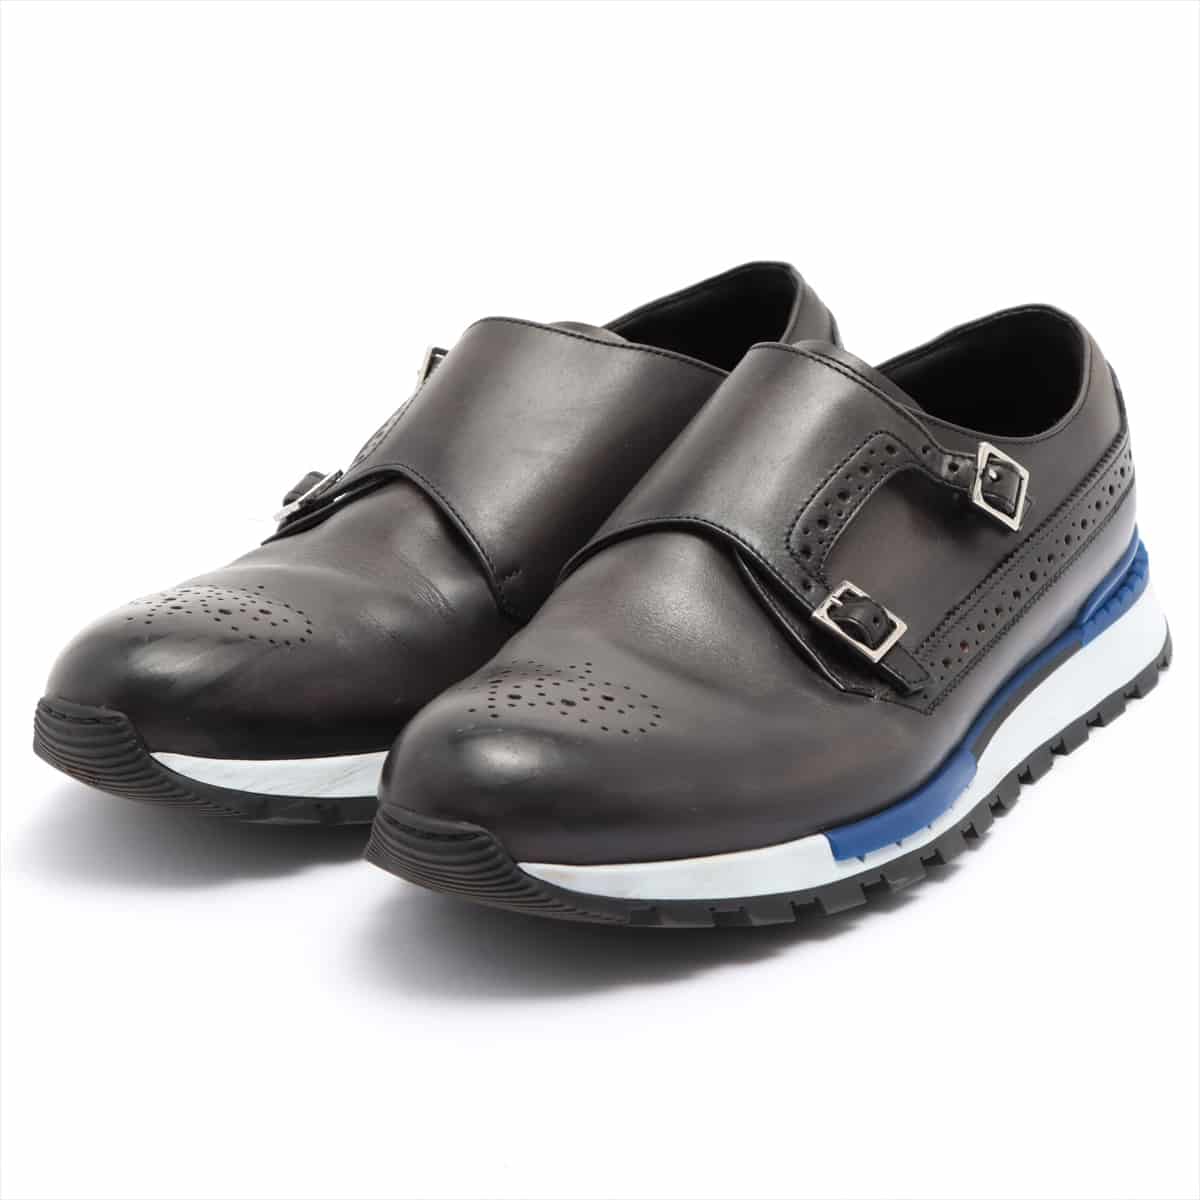 Berluti Leather Leather shoes 8 1/2 Men's Black Double monk Sneaker soles S5321-V1